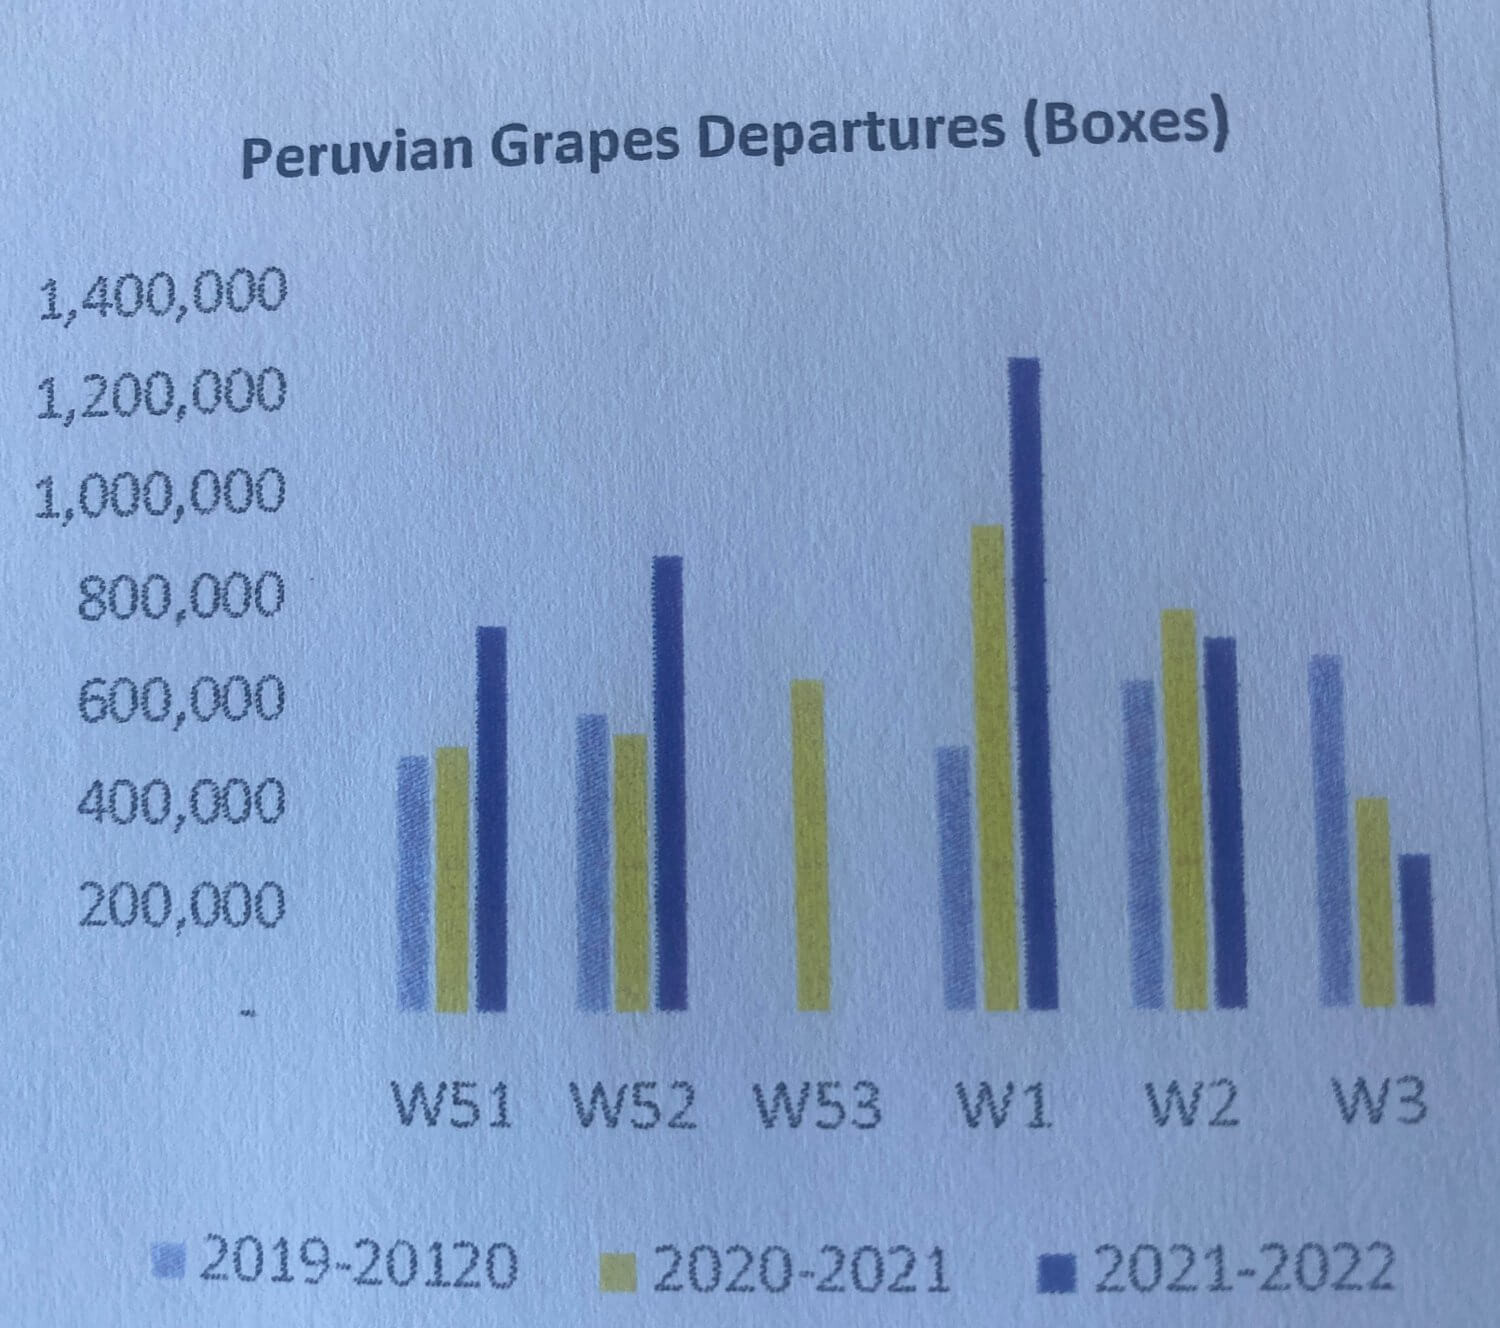 Peru Grape Export Departures to China/Hk to Week 1